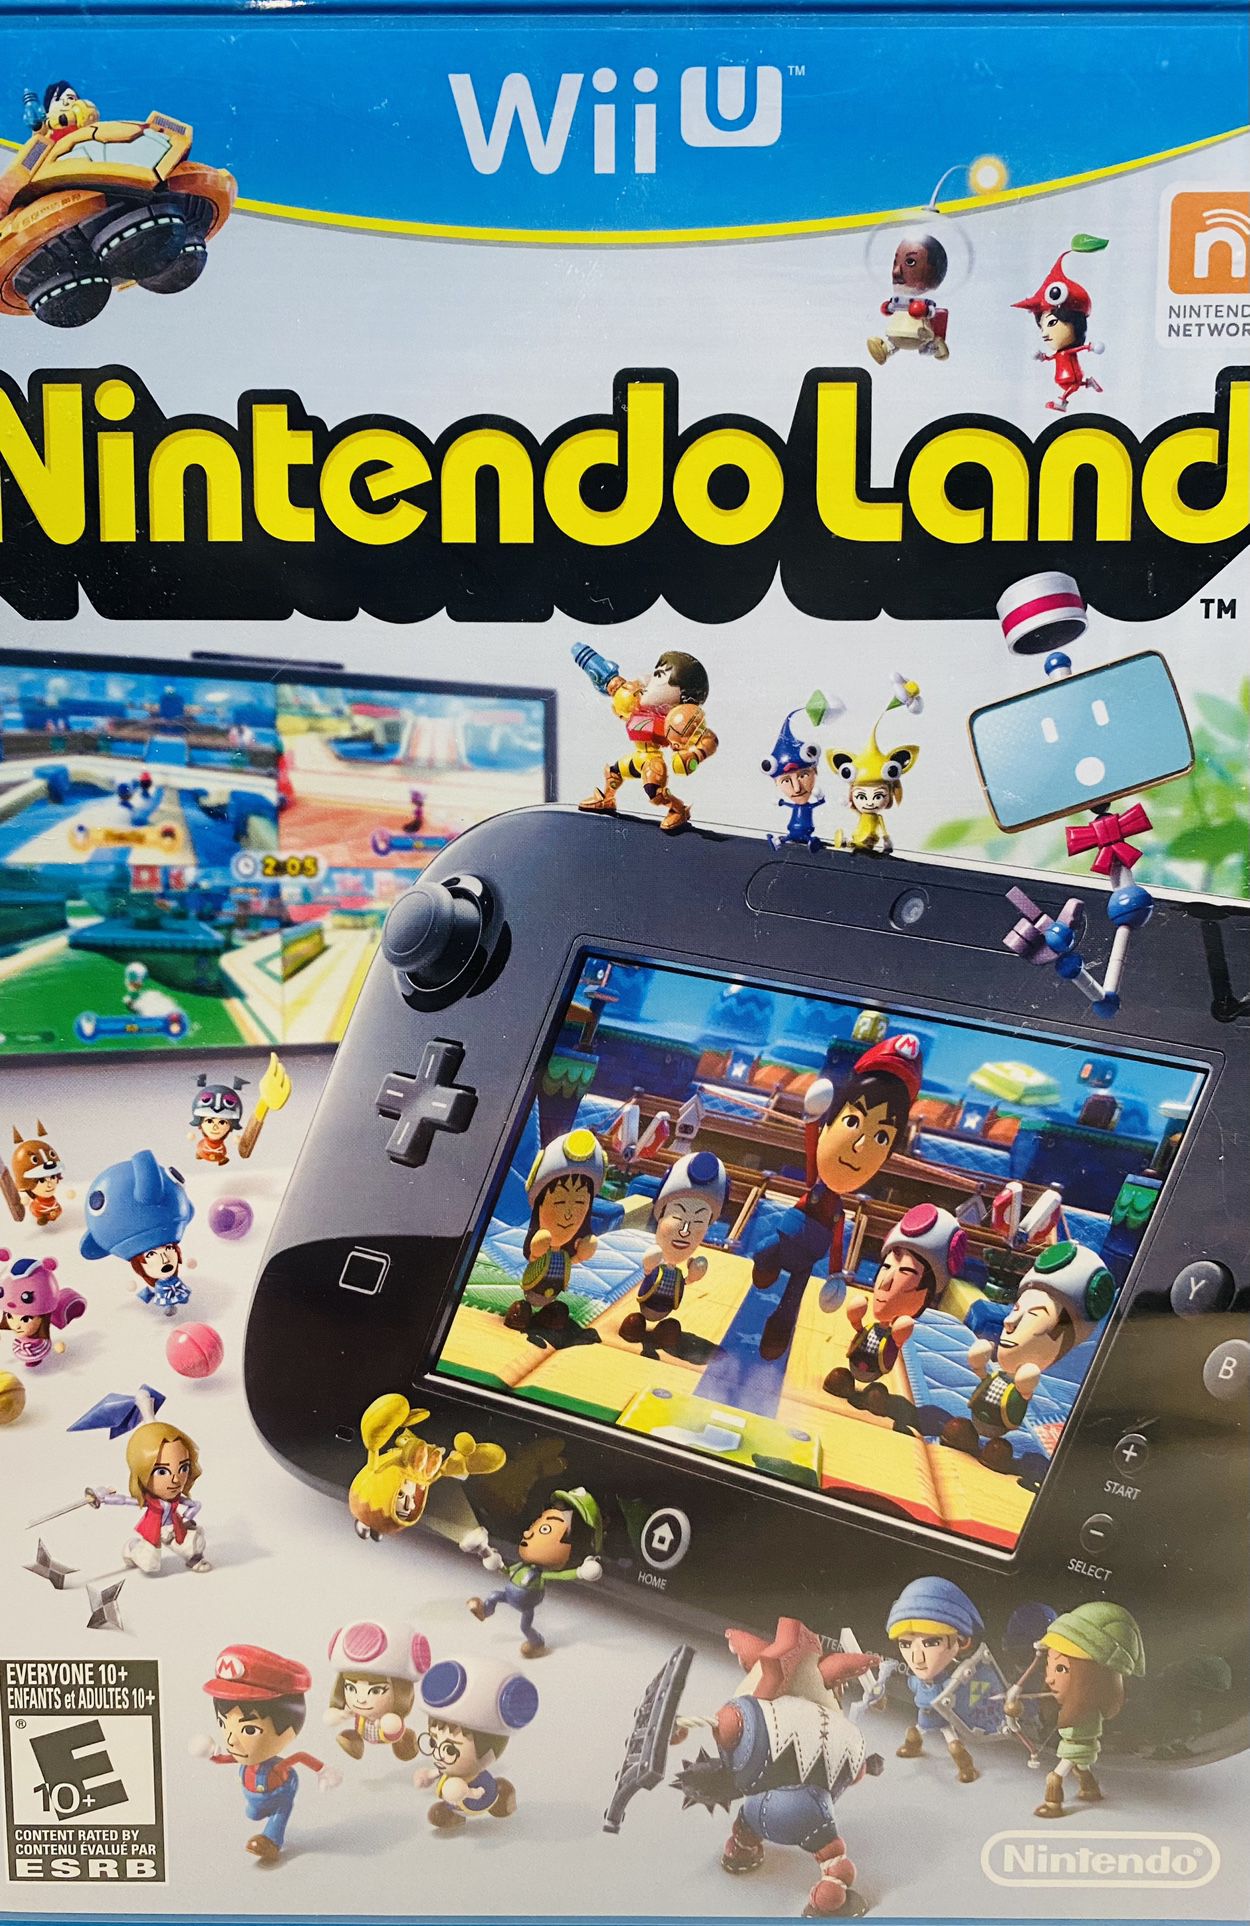 Nintendo Land (Nintendo Wii U, 2012) Brand New Factory Sealed